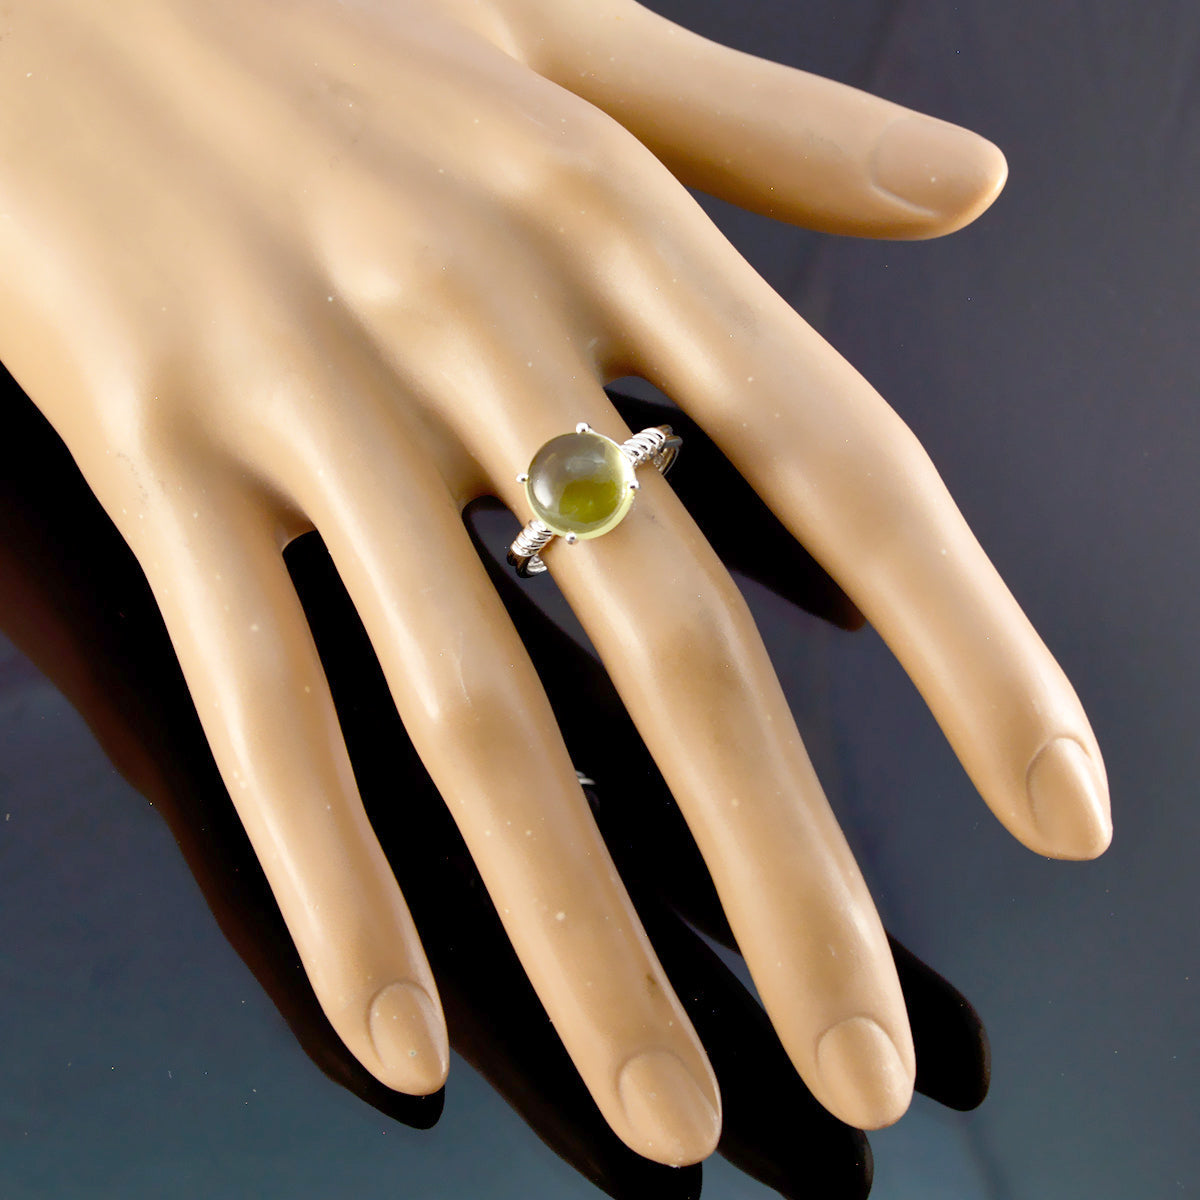 Riyo Bonny Gems Lemon Quartz Solid Silver Rings Touchstone Jewelry